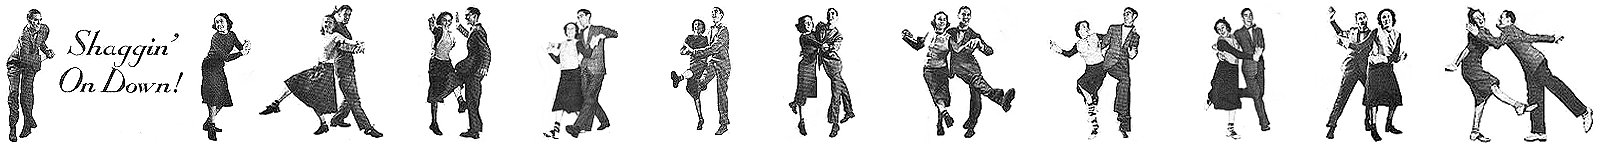 Sixties City Dance - The Shag